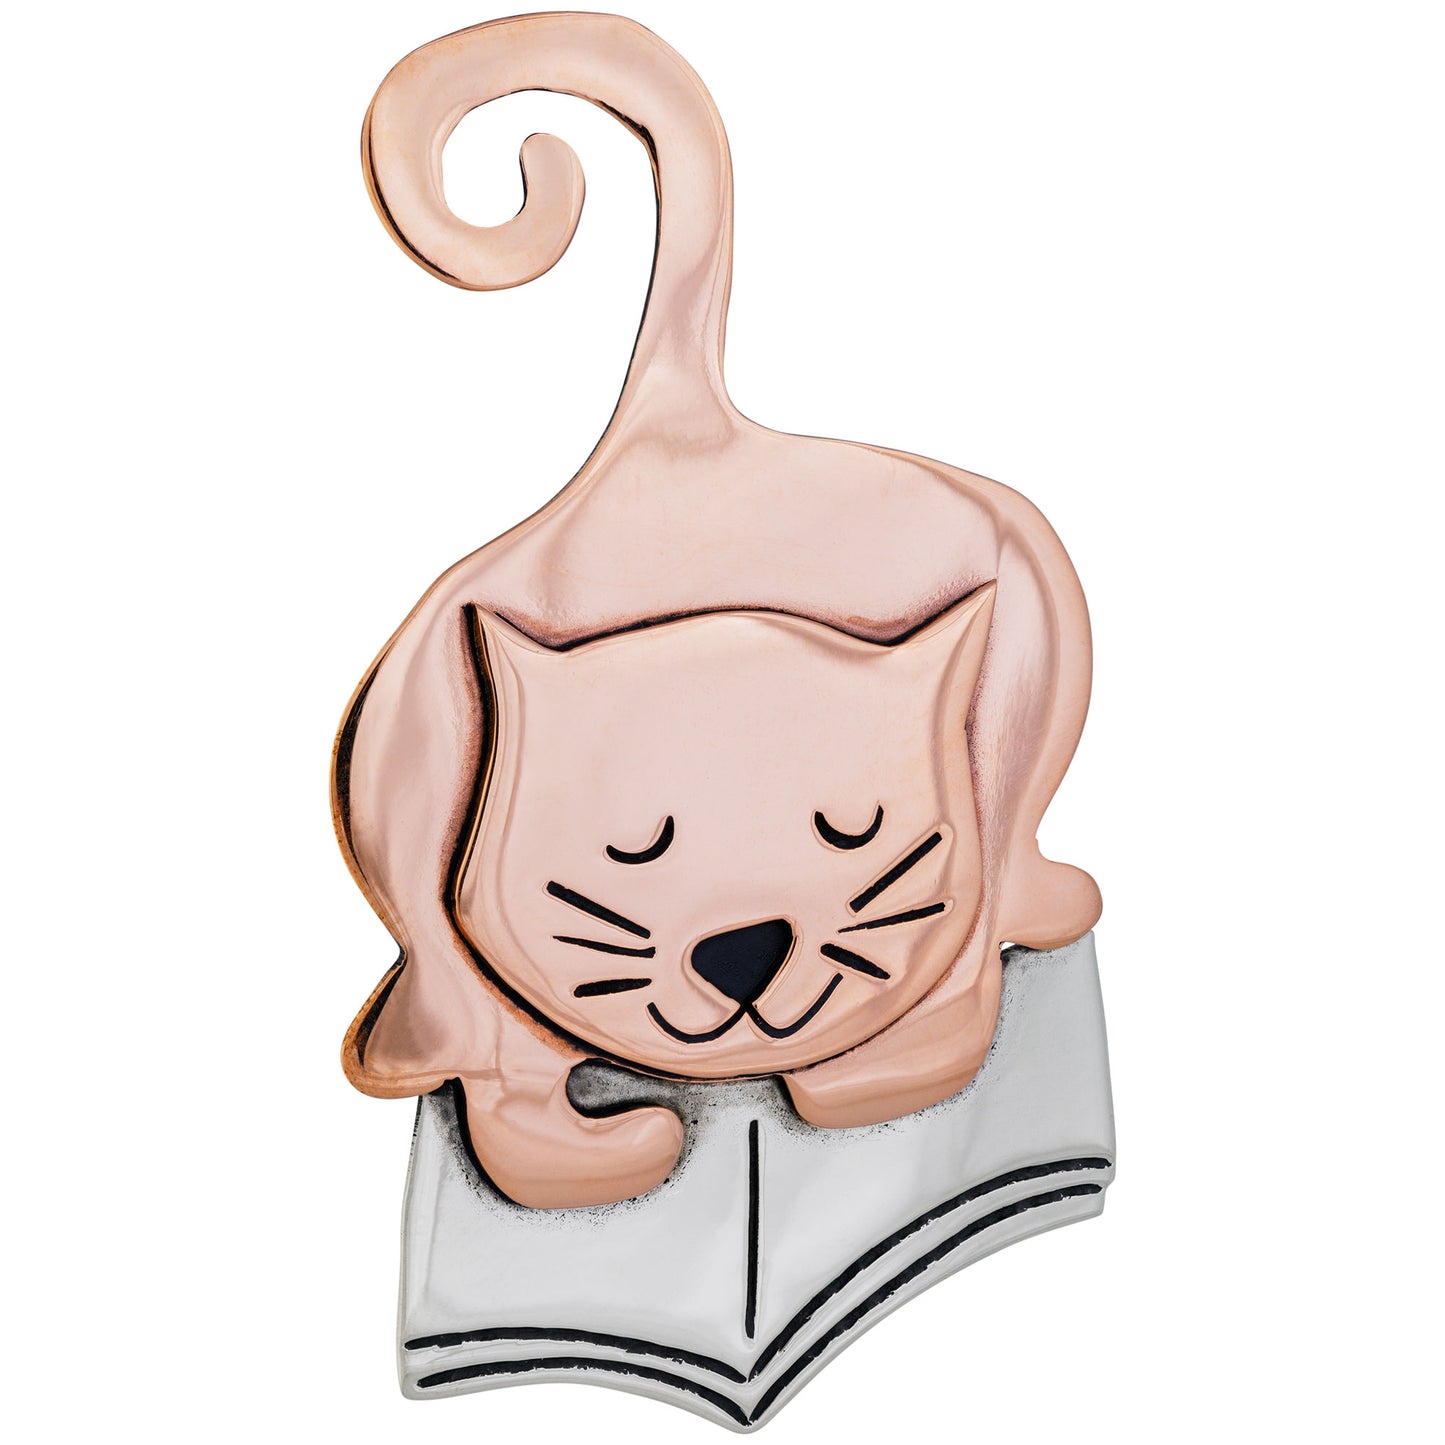 Pet Lover Book Club Pin